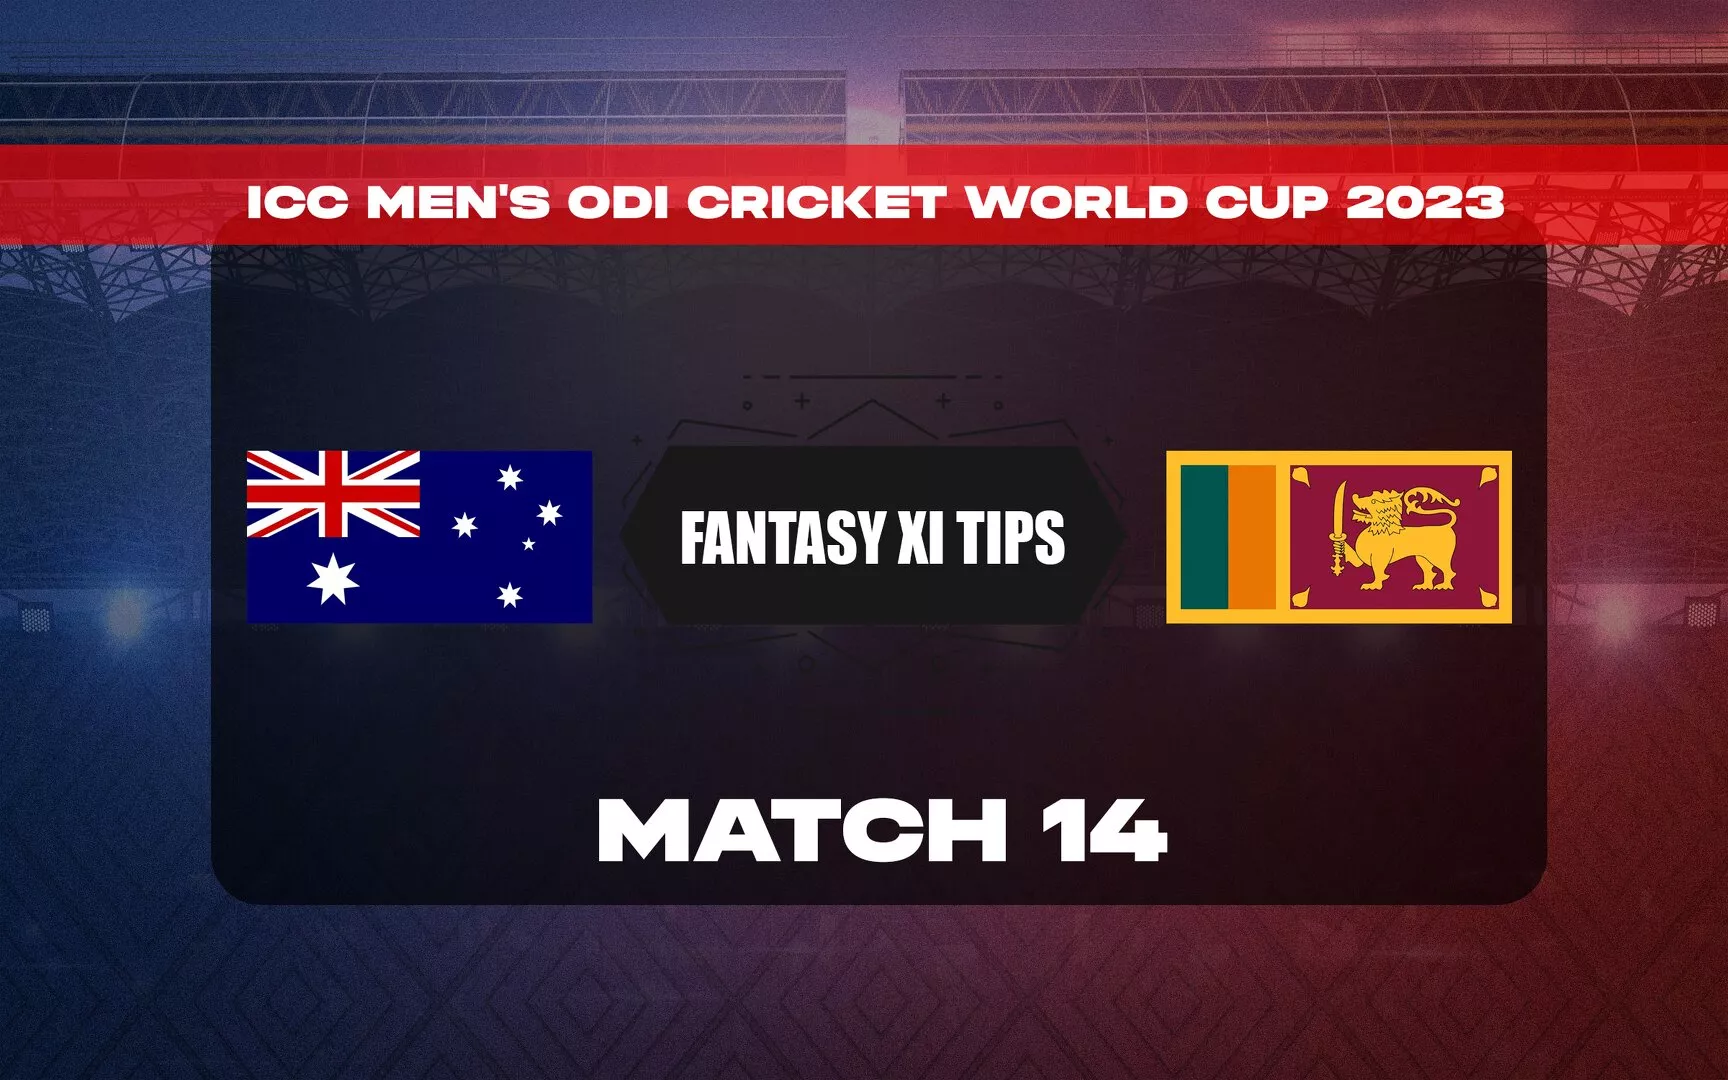 AUS vs SL Dream11 Prediction, Dream11 Playing XI, Today Match 14, ICC Men's ODI Cricket World Cup 2023